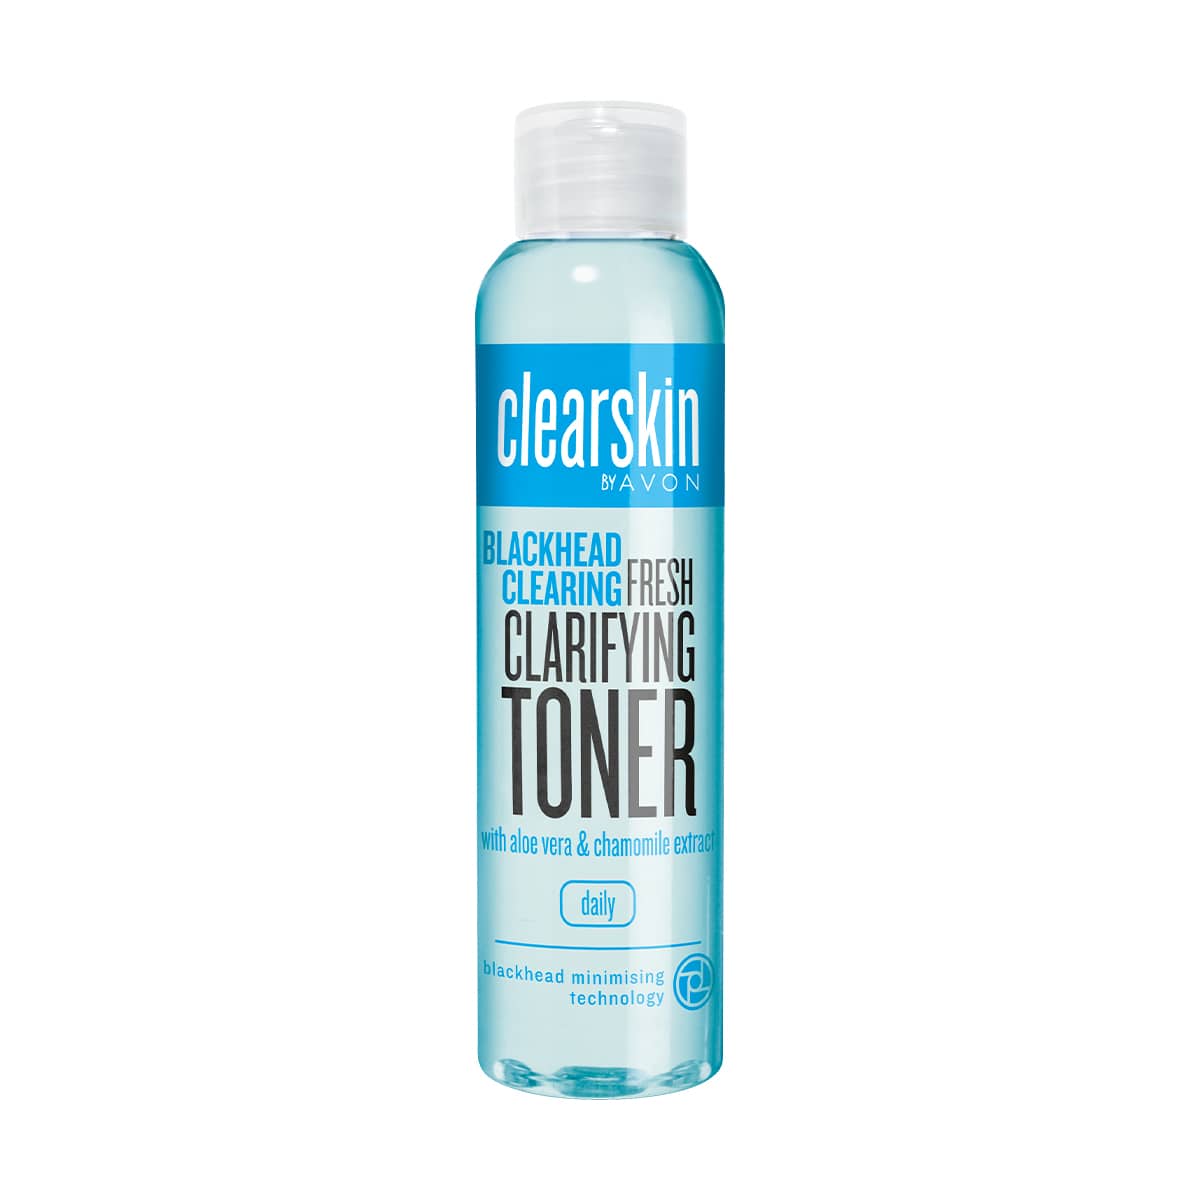 Clearskin Blackhead Clearing Fresh Clarifying Toner 100ml